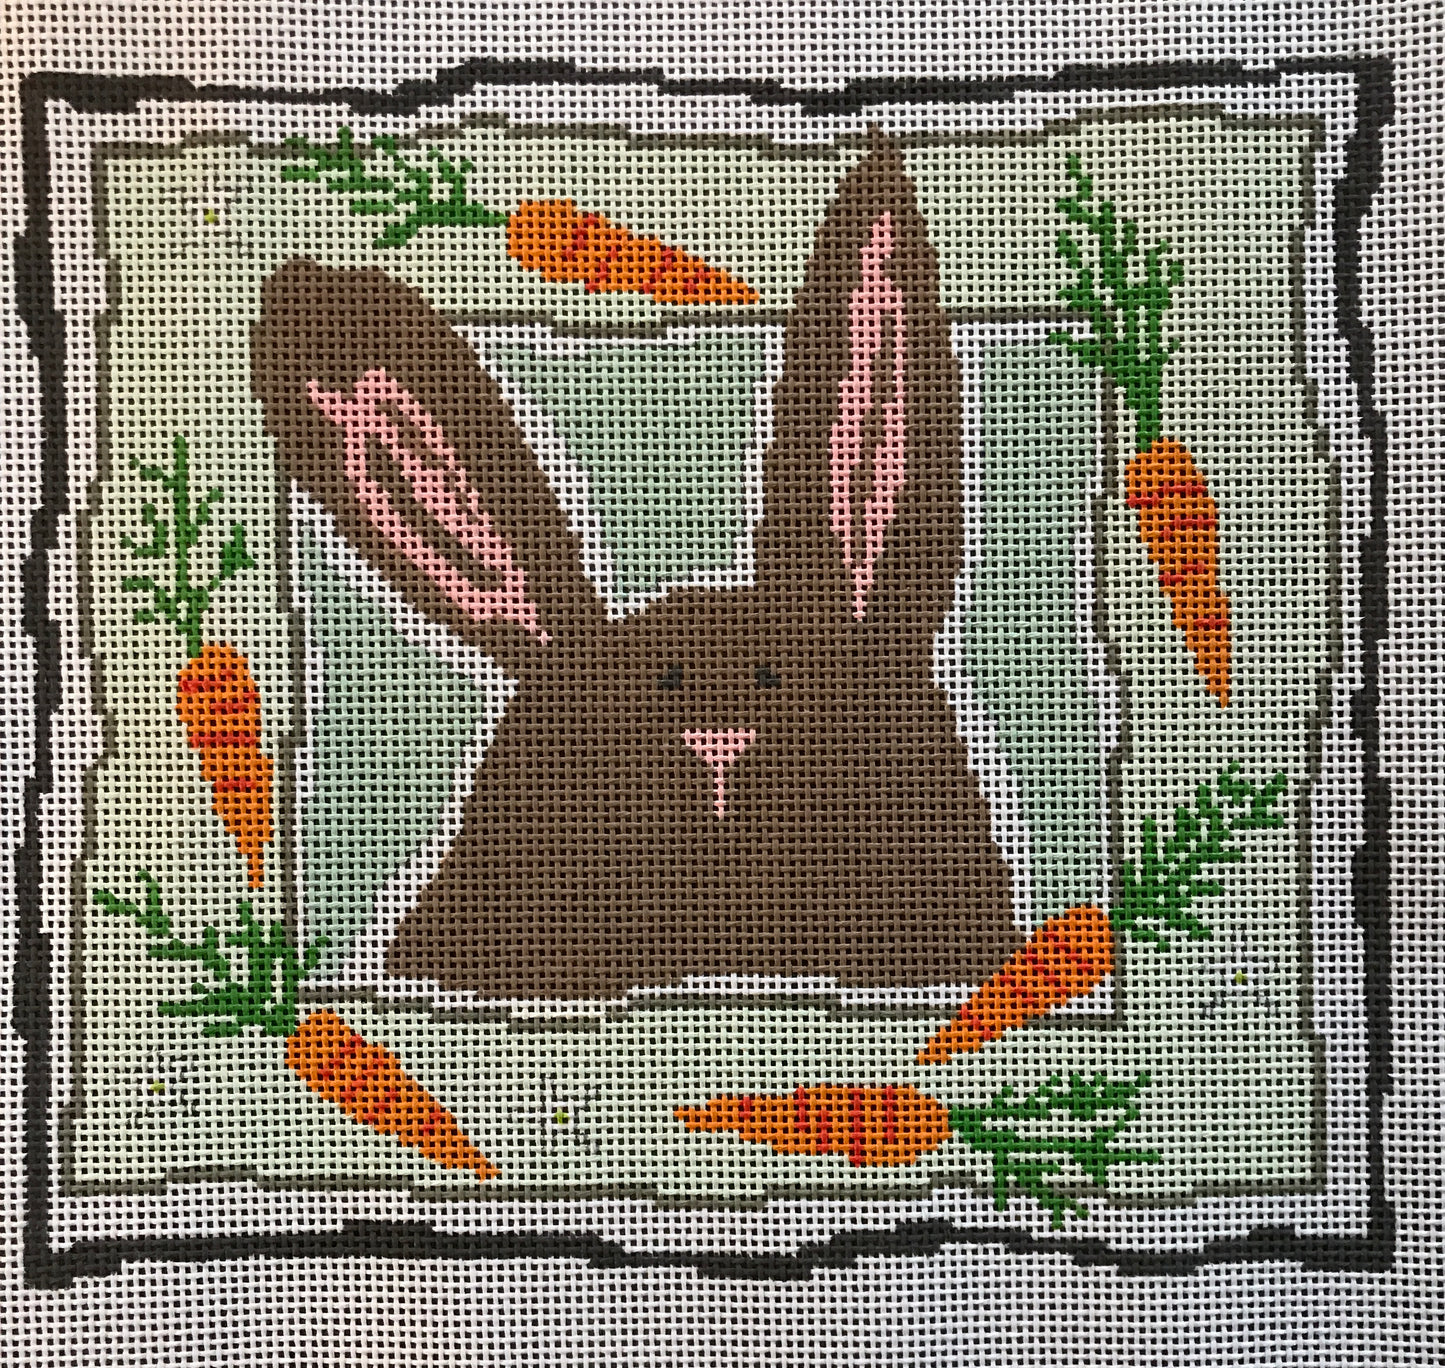 Rabbit & Carrots